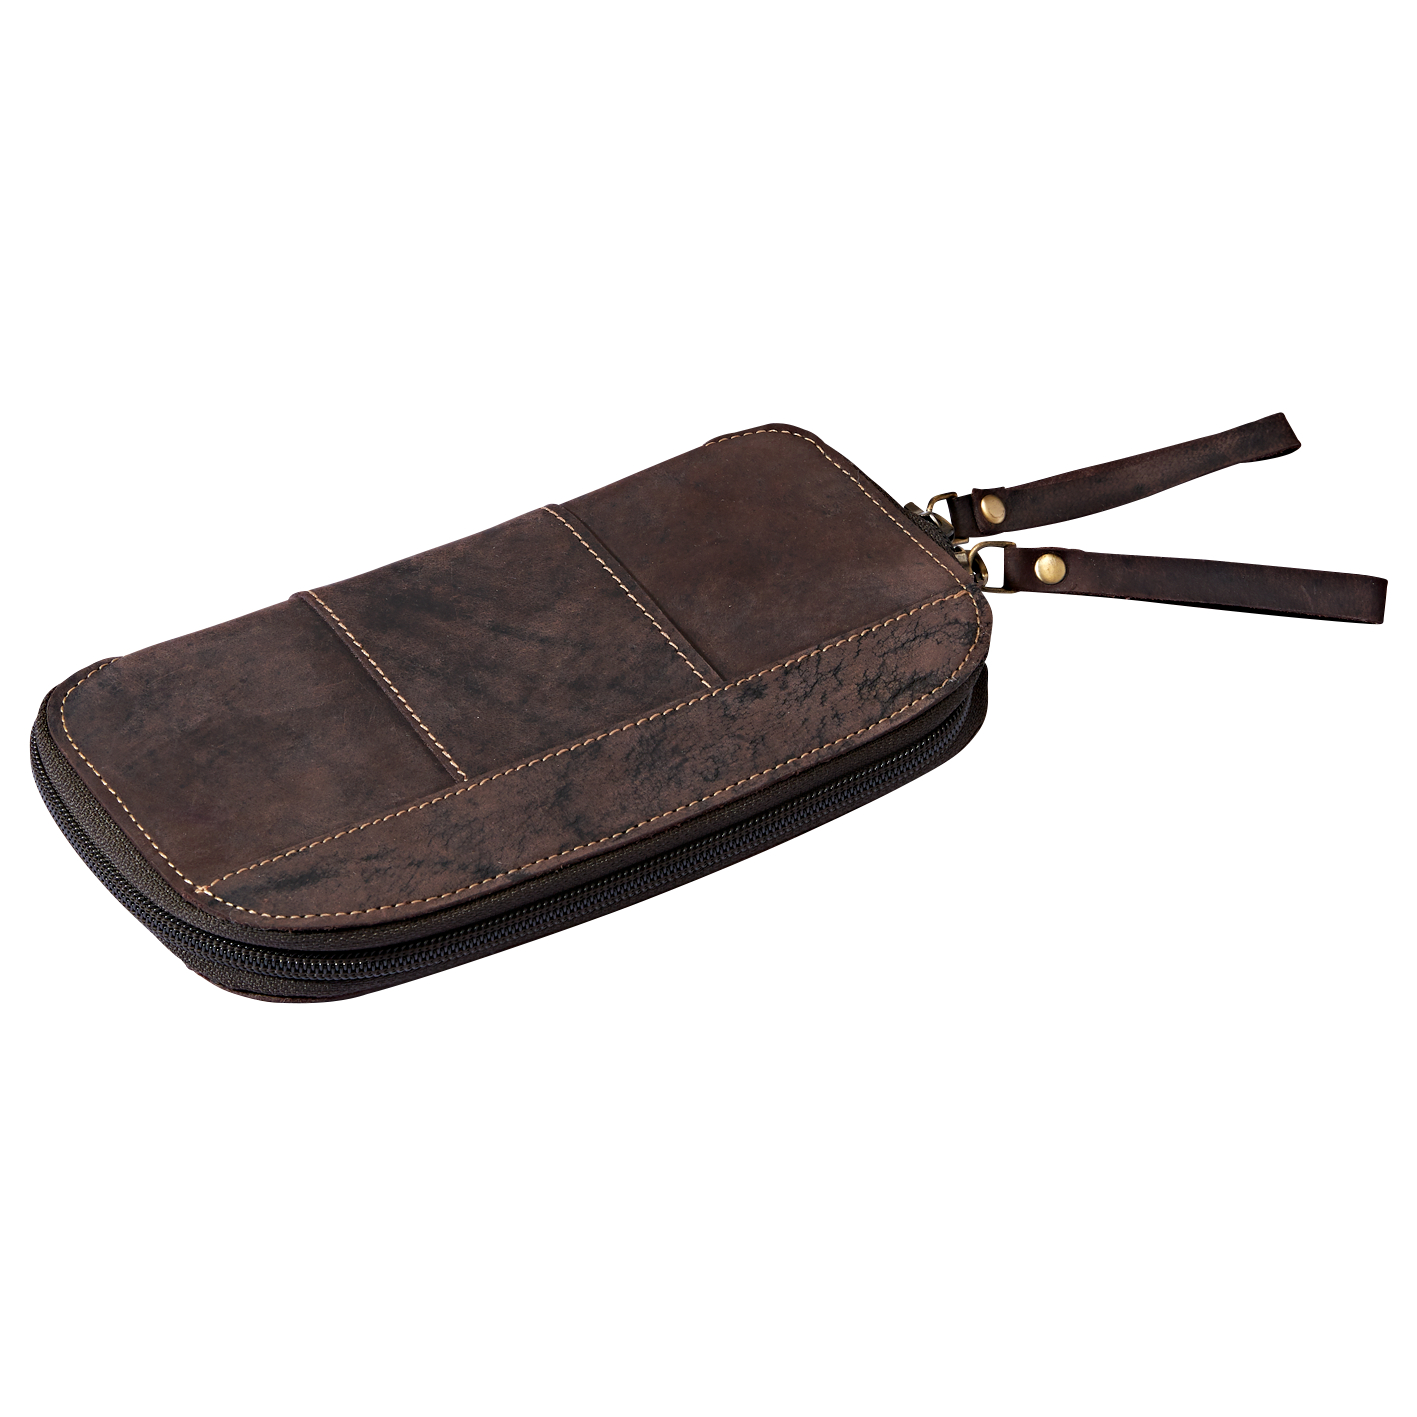 Perca Original Perca Original Fly case (Leather) 